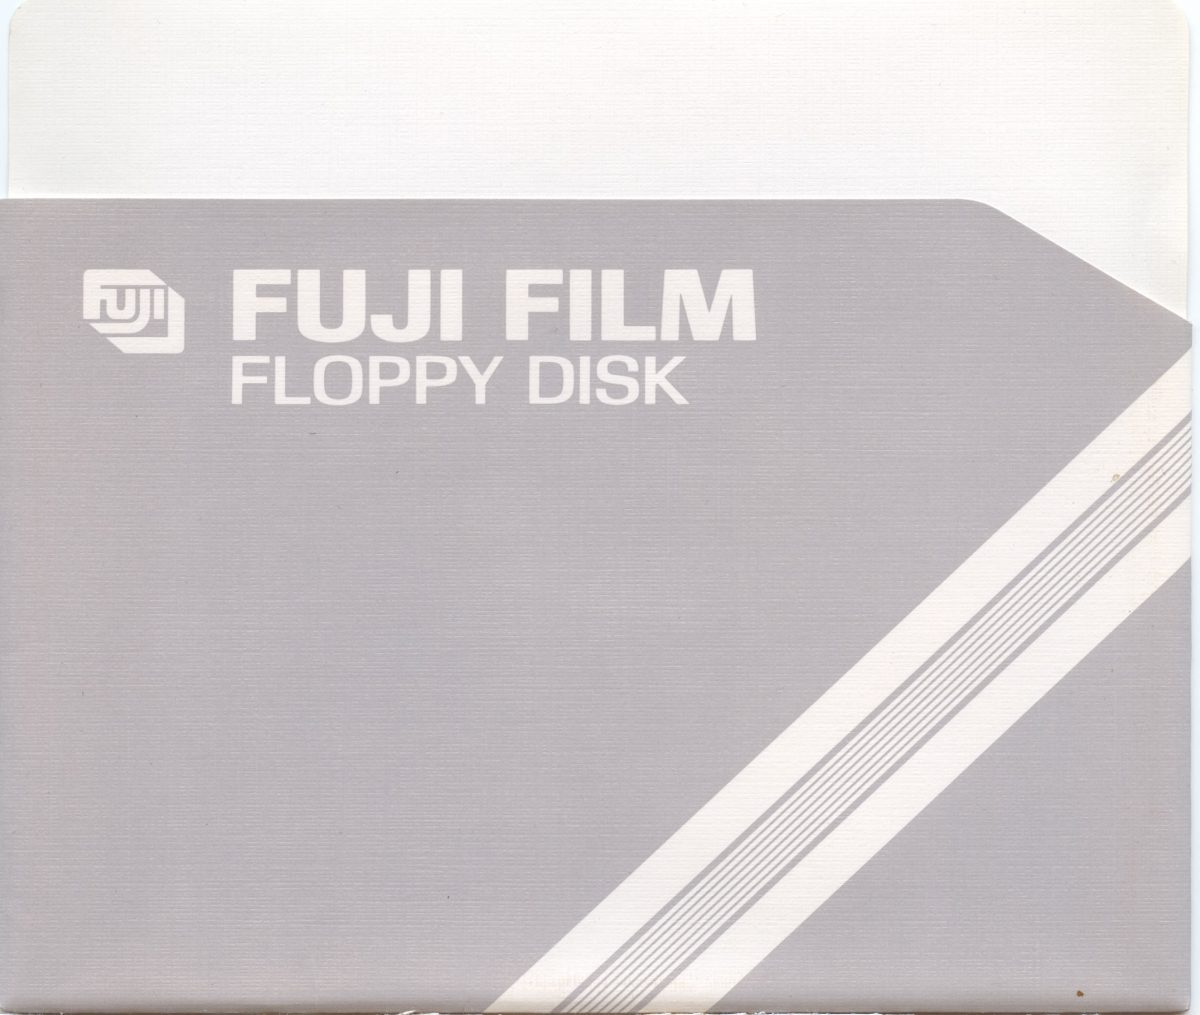 Fuji Film Floppy DIsk Cover Sleeves